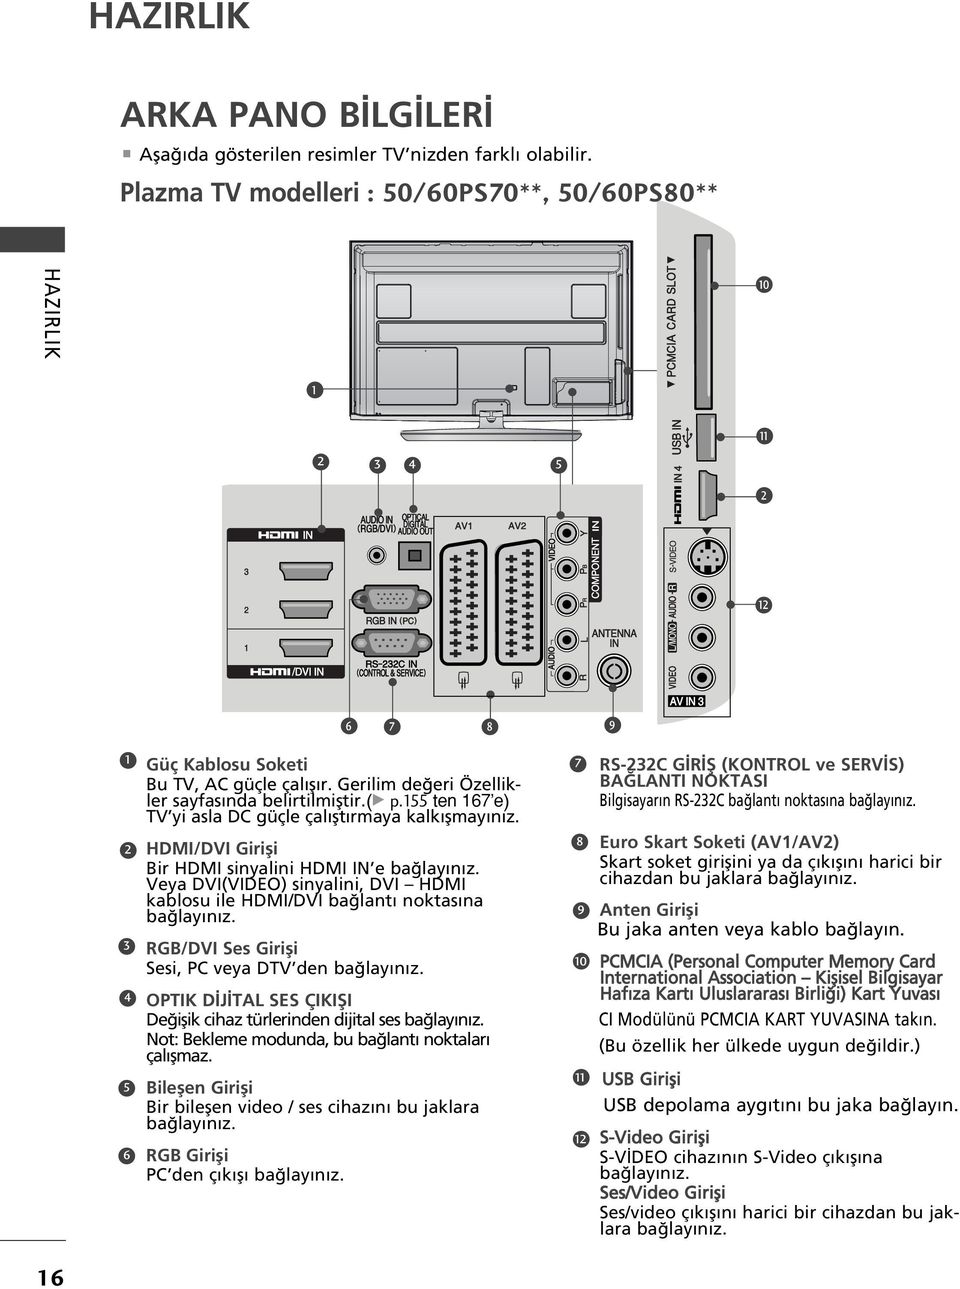 Veya DVI(VIDO) sinyalini, DVI HDMI kablosu ile HDMI/DVI ba lant noktas na ba lay n z. RGB/DVI Ses Girifli Sesi, PC veya DTV den ba lay n z.